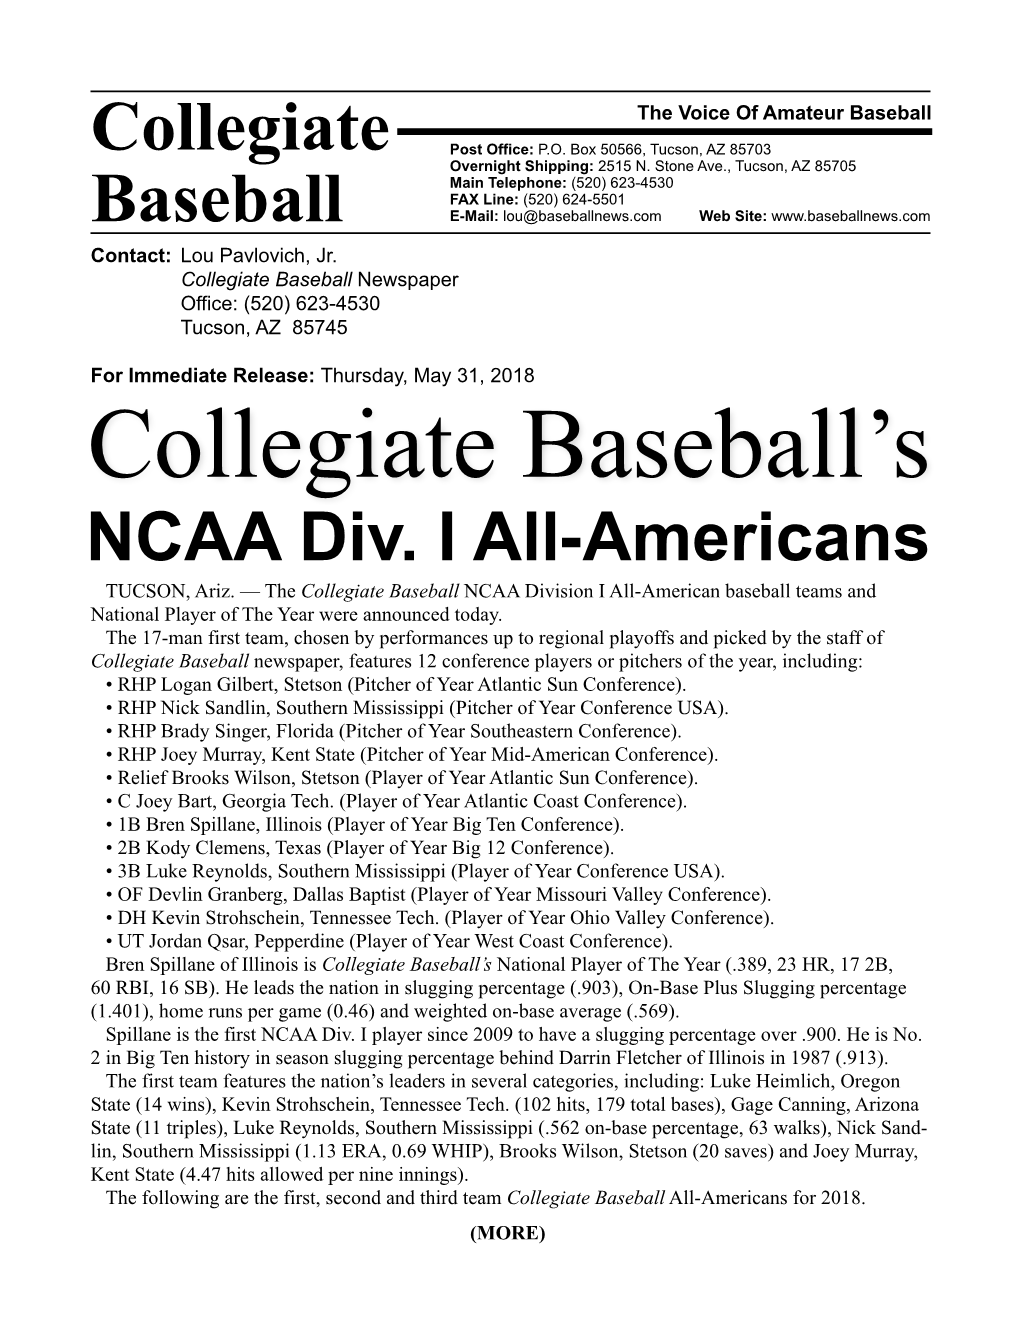 2018 Collegiate Baseball All-Americans